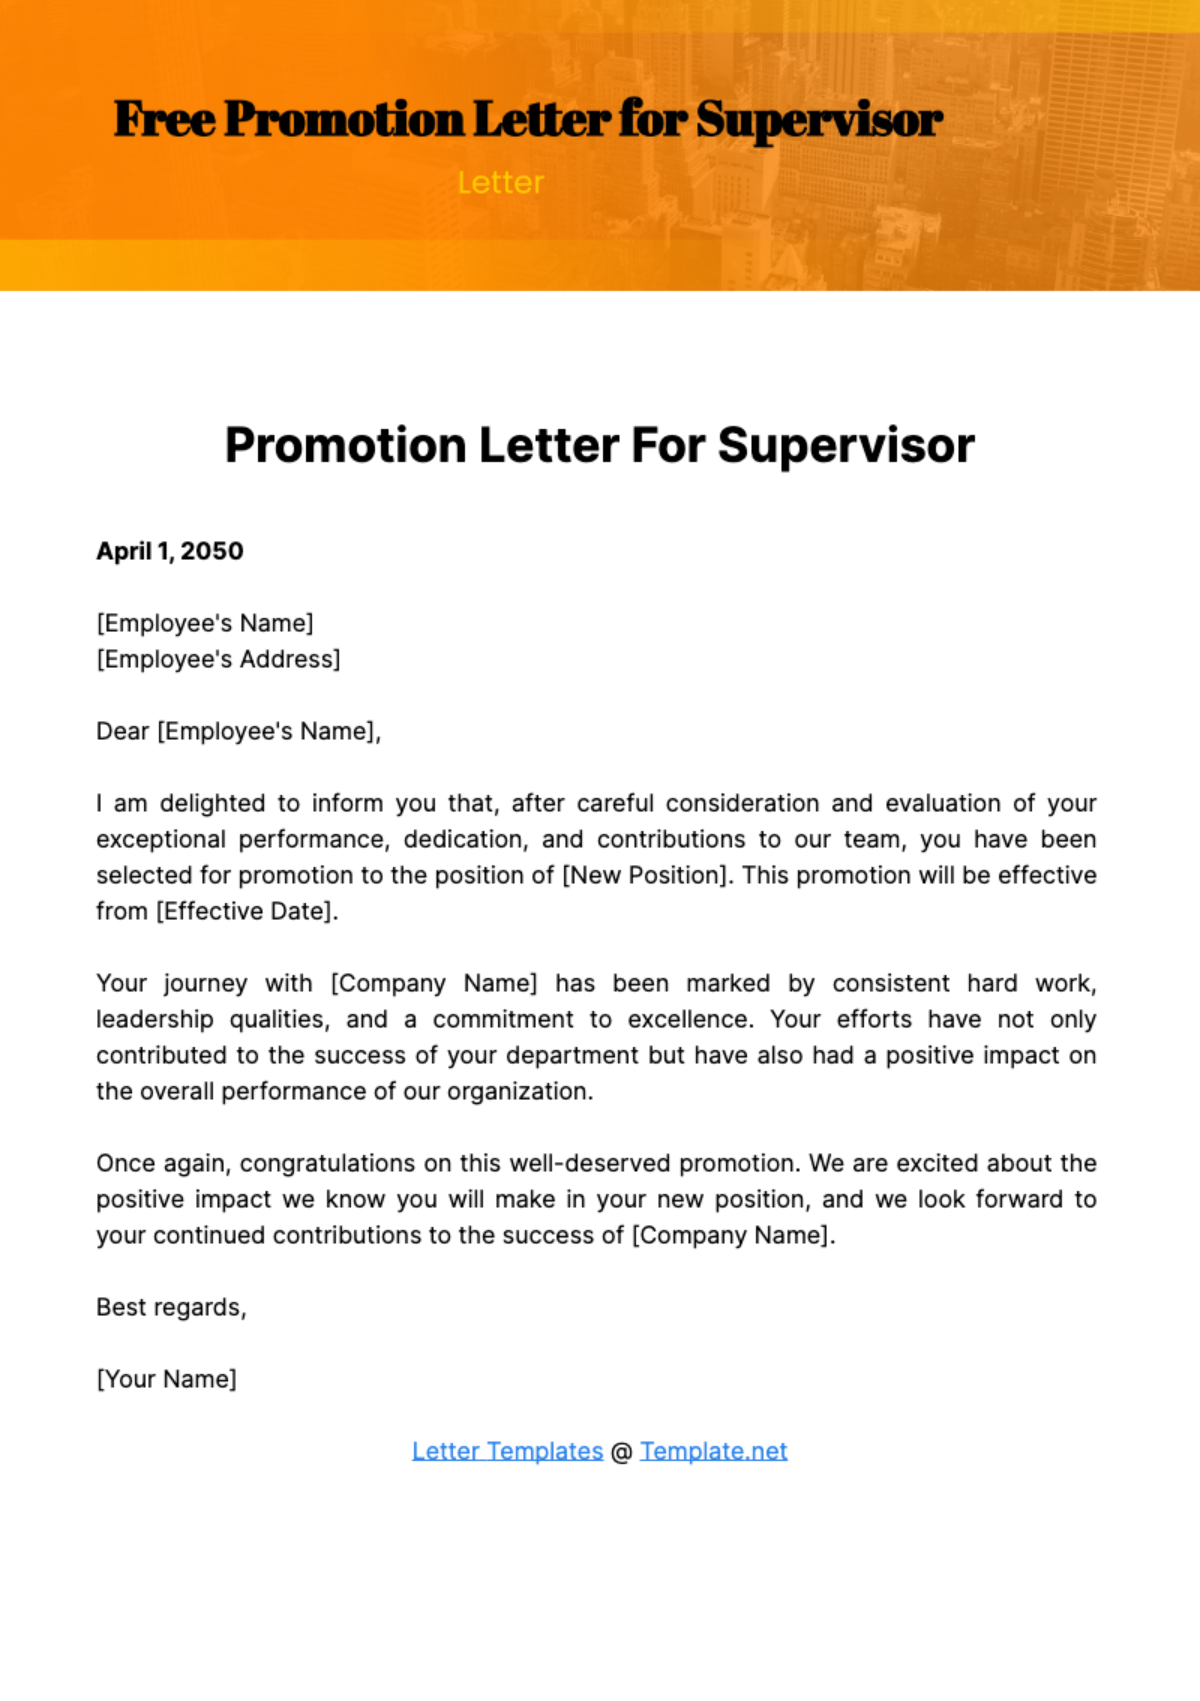 Promotion Letter for Supervisor Template